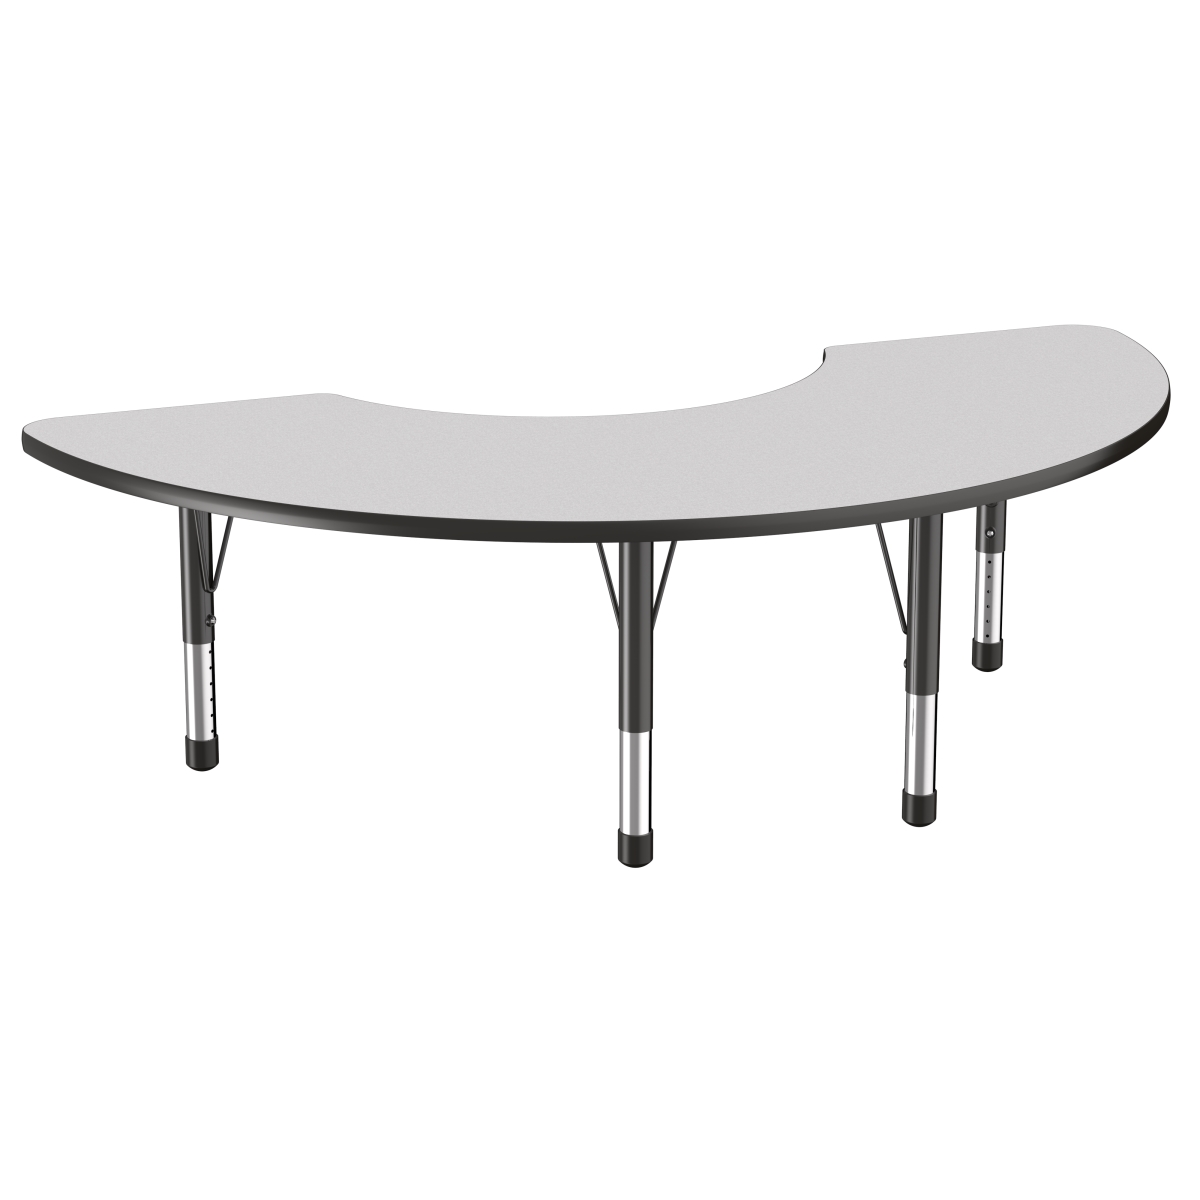 10079-gybk 36 X 72 In. Half Moon T-mold Adjustable Activity Table With Chunky Leg - Grey & Black